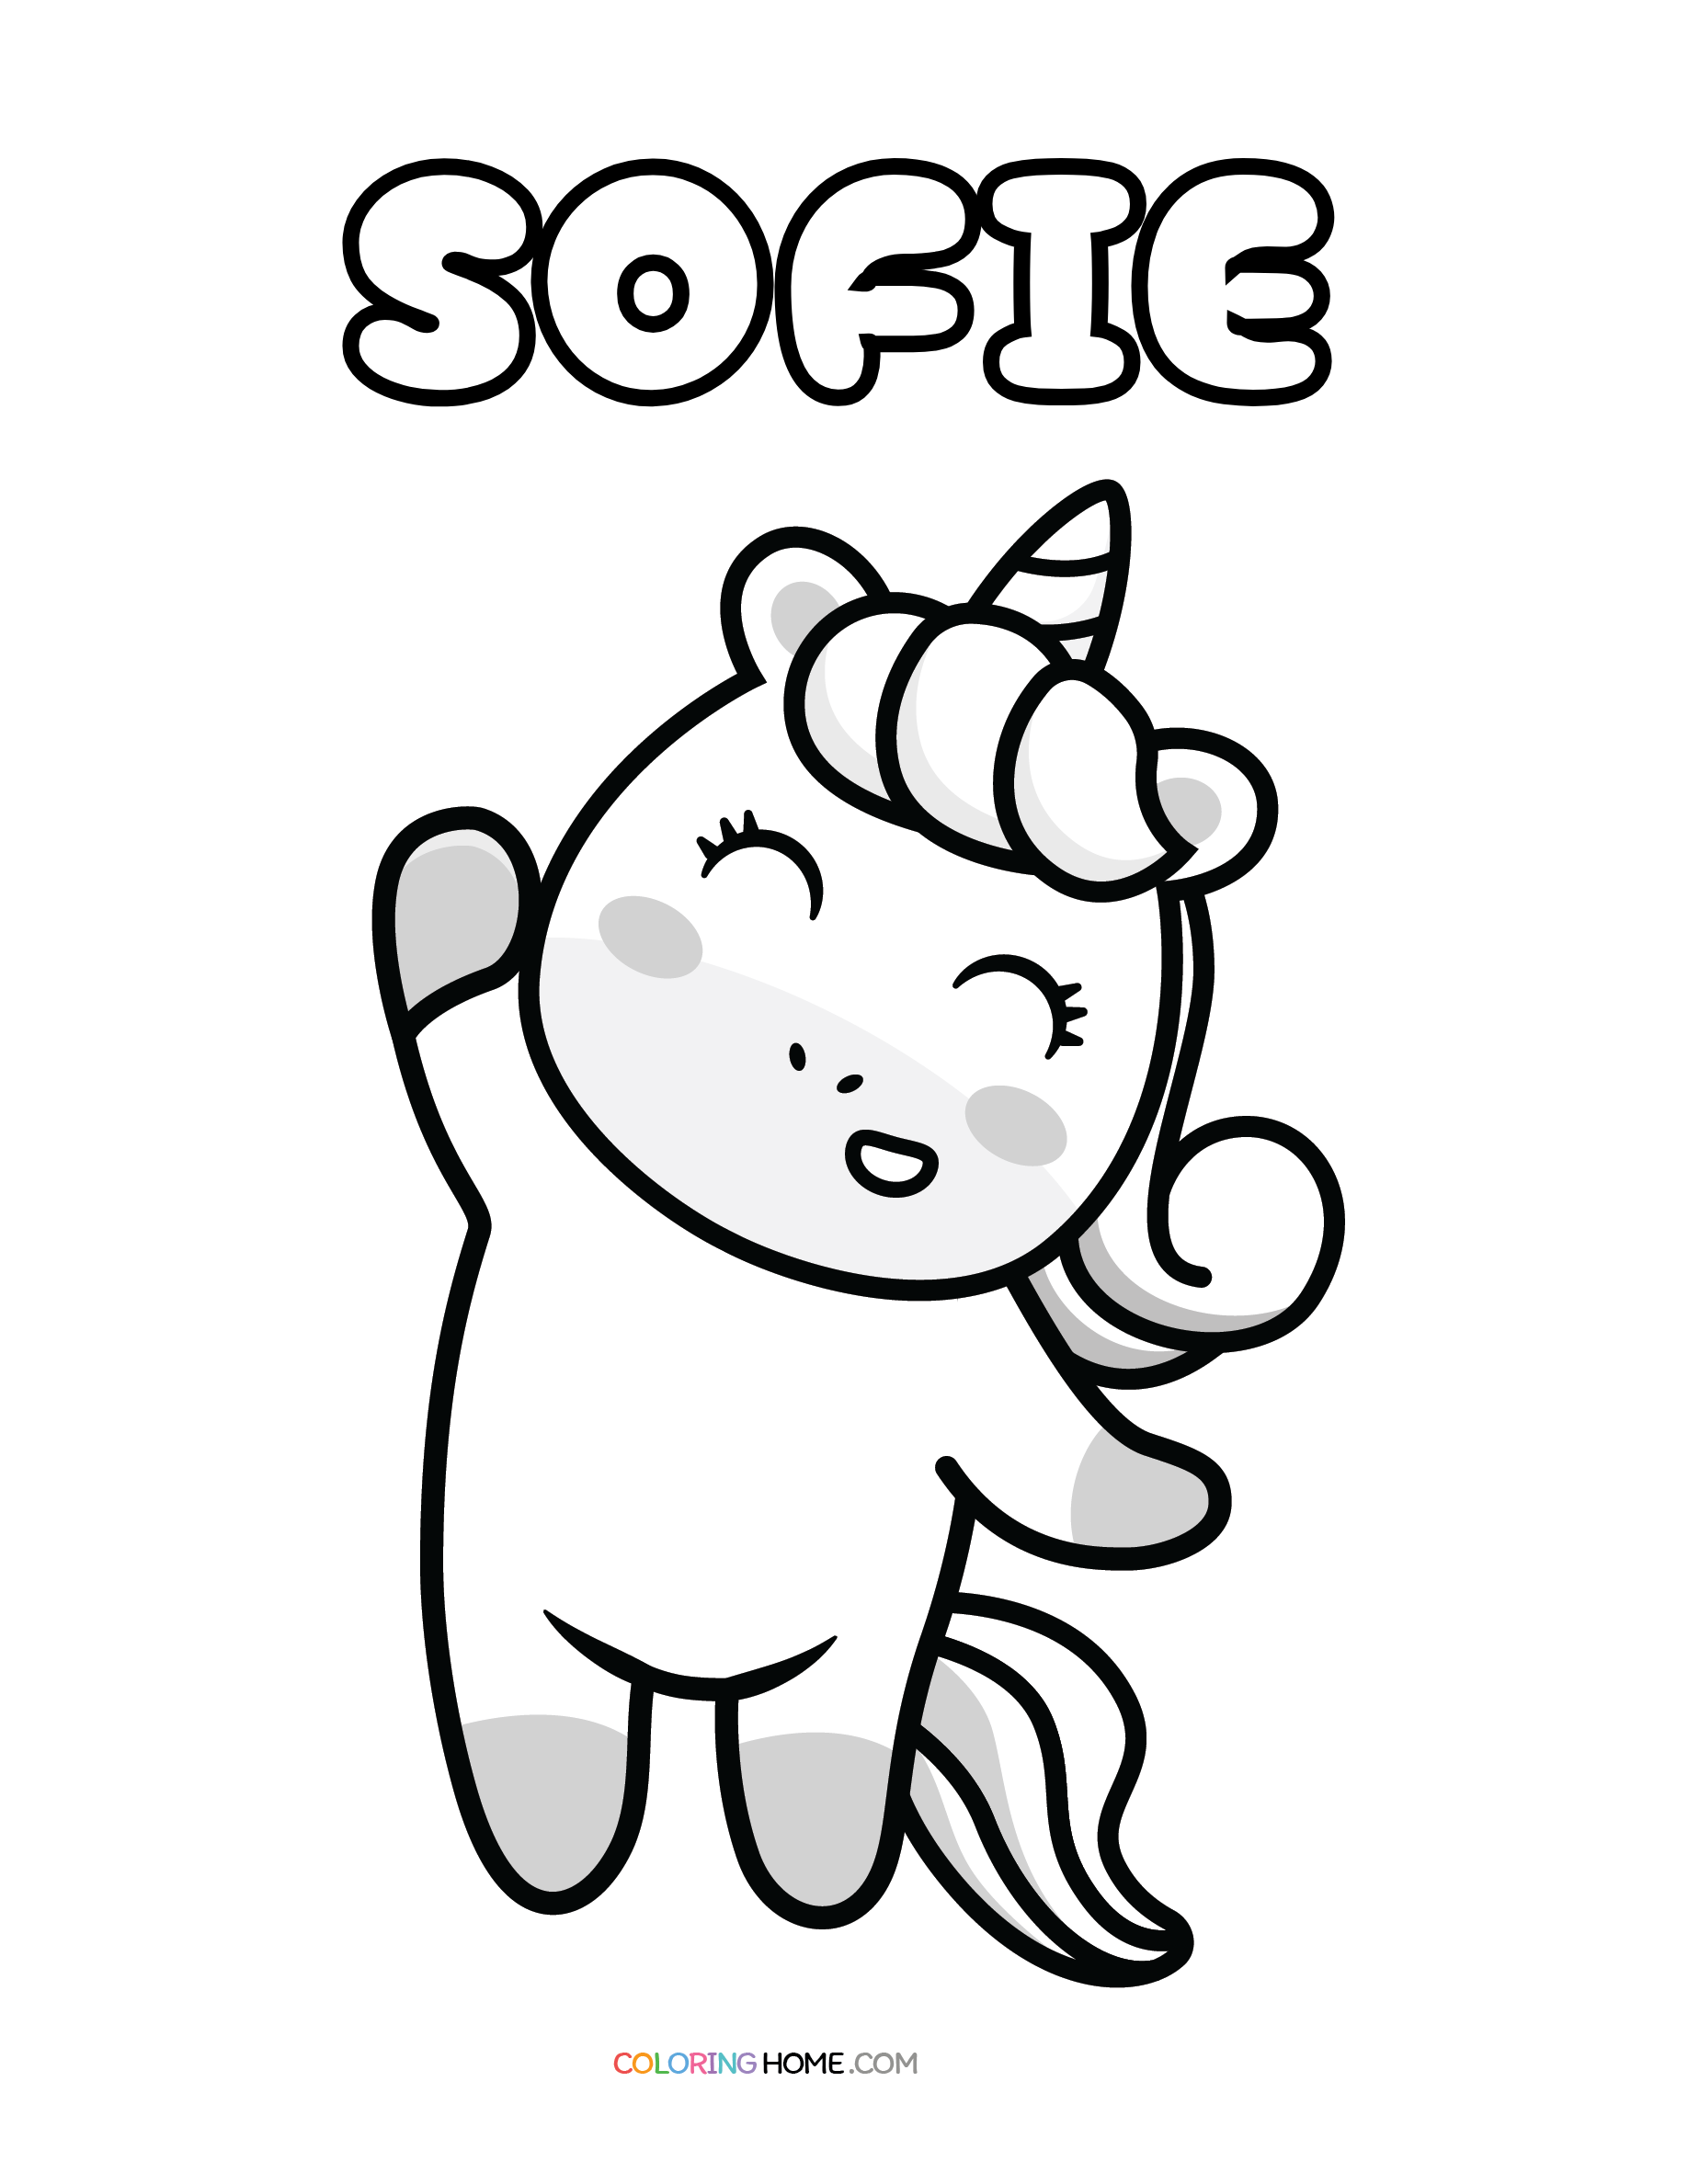 Sofie unicorn coloring page